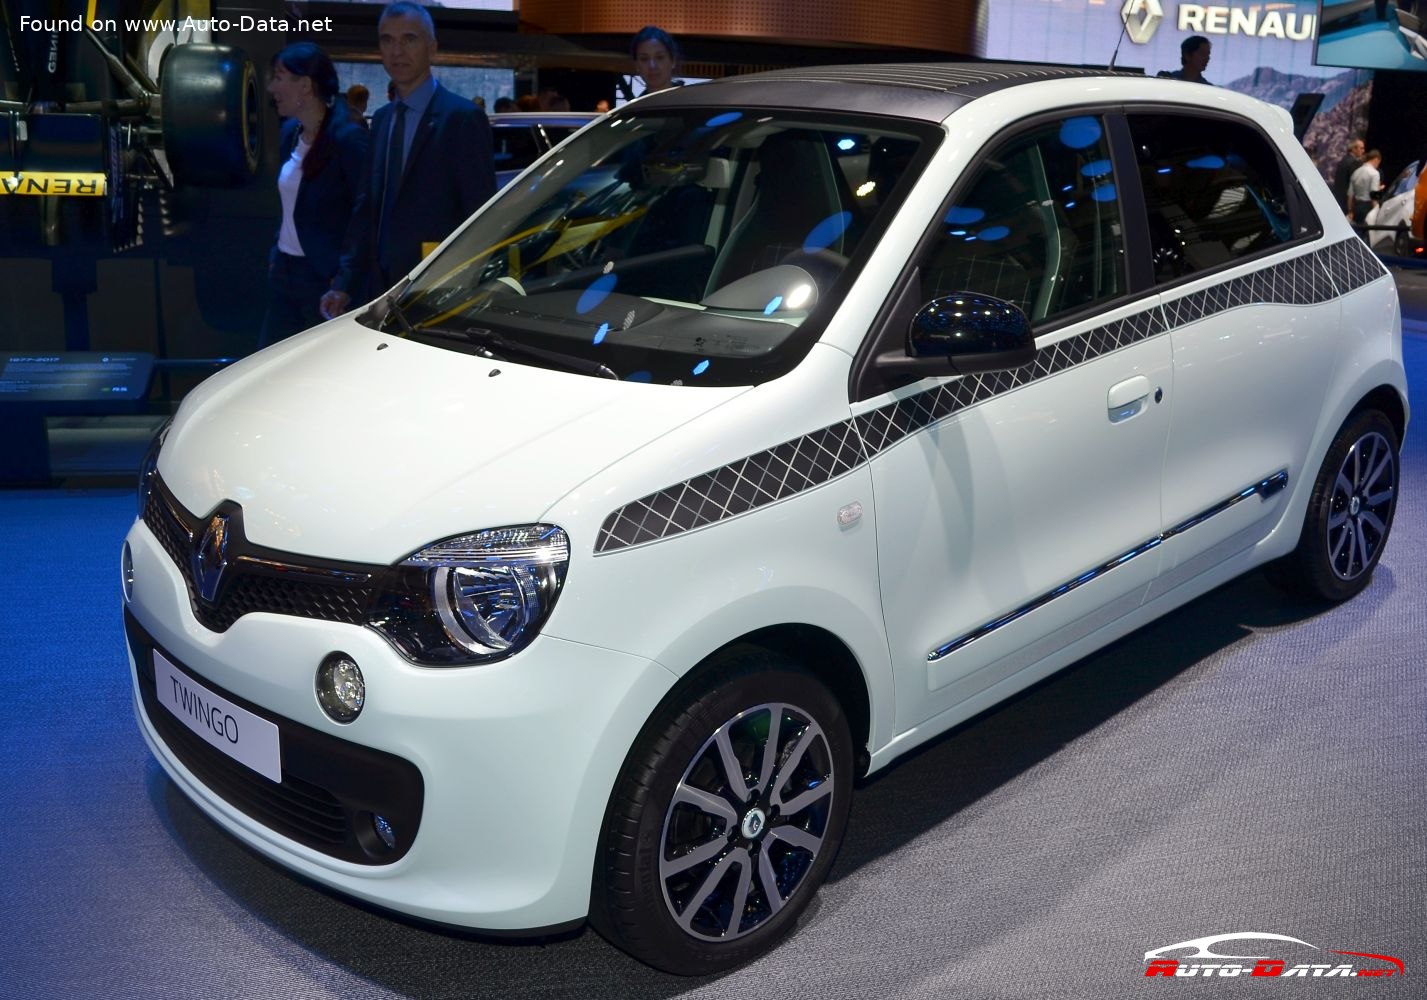 Renault Twingo 0.9 TCe - hrabra nova ruka